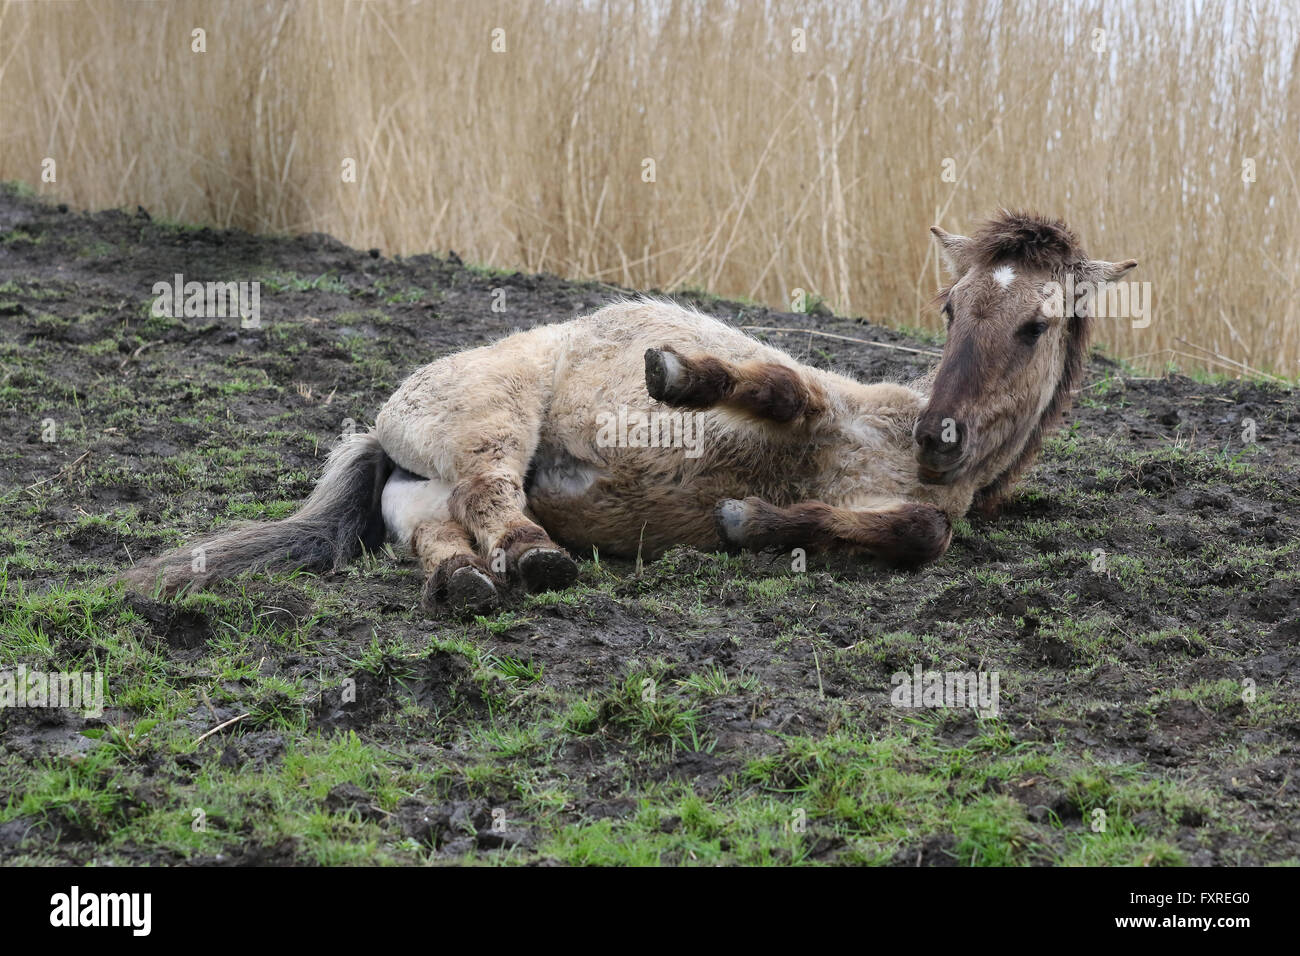 Konik horse lying down in the mud in Oostvaardersplassen, The Netherlands Stock Photo